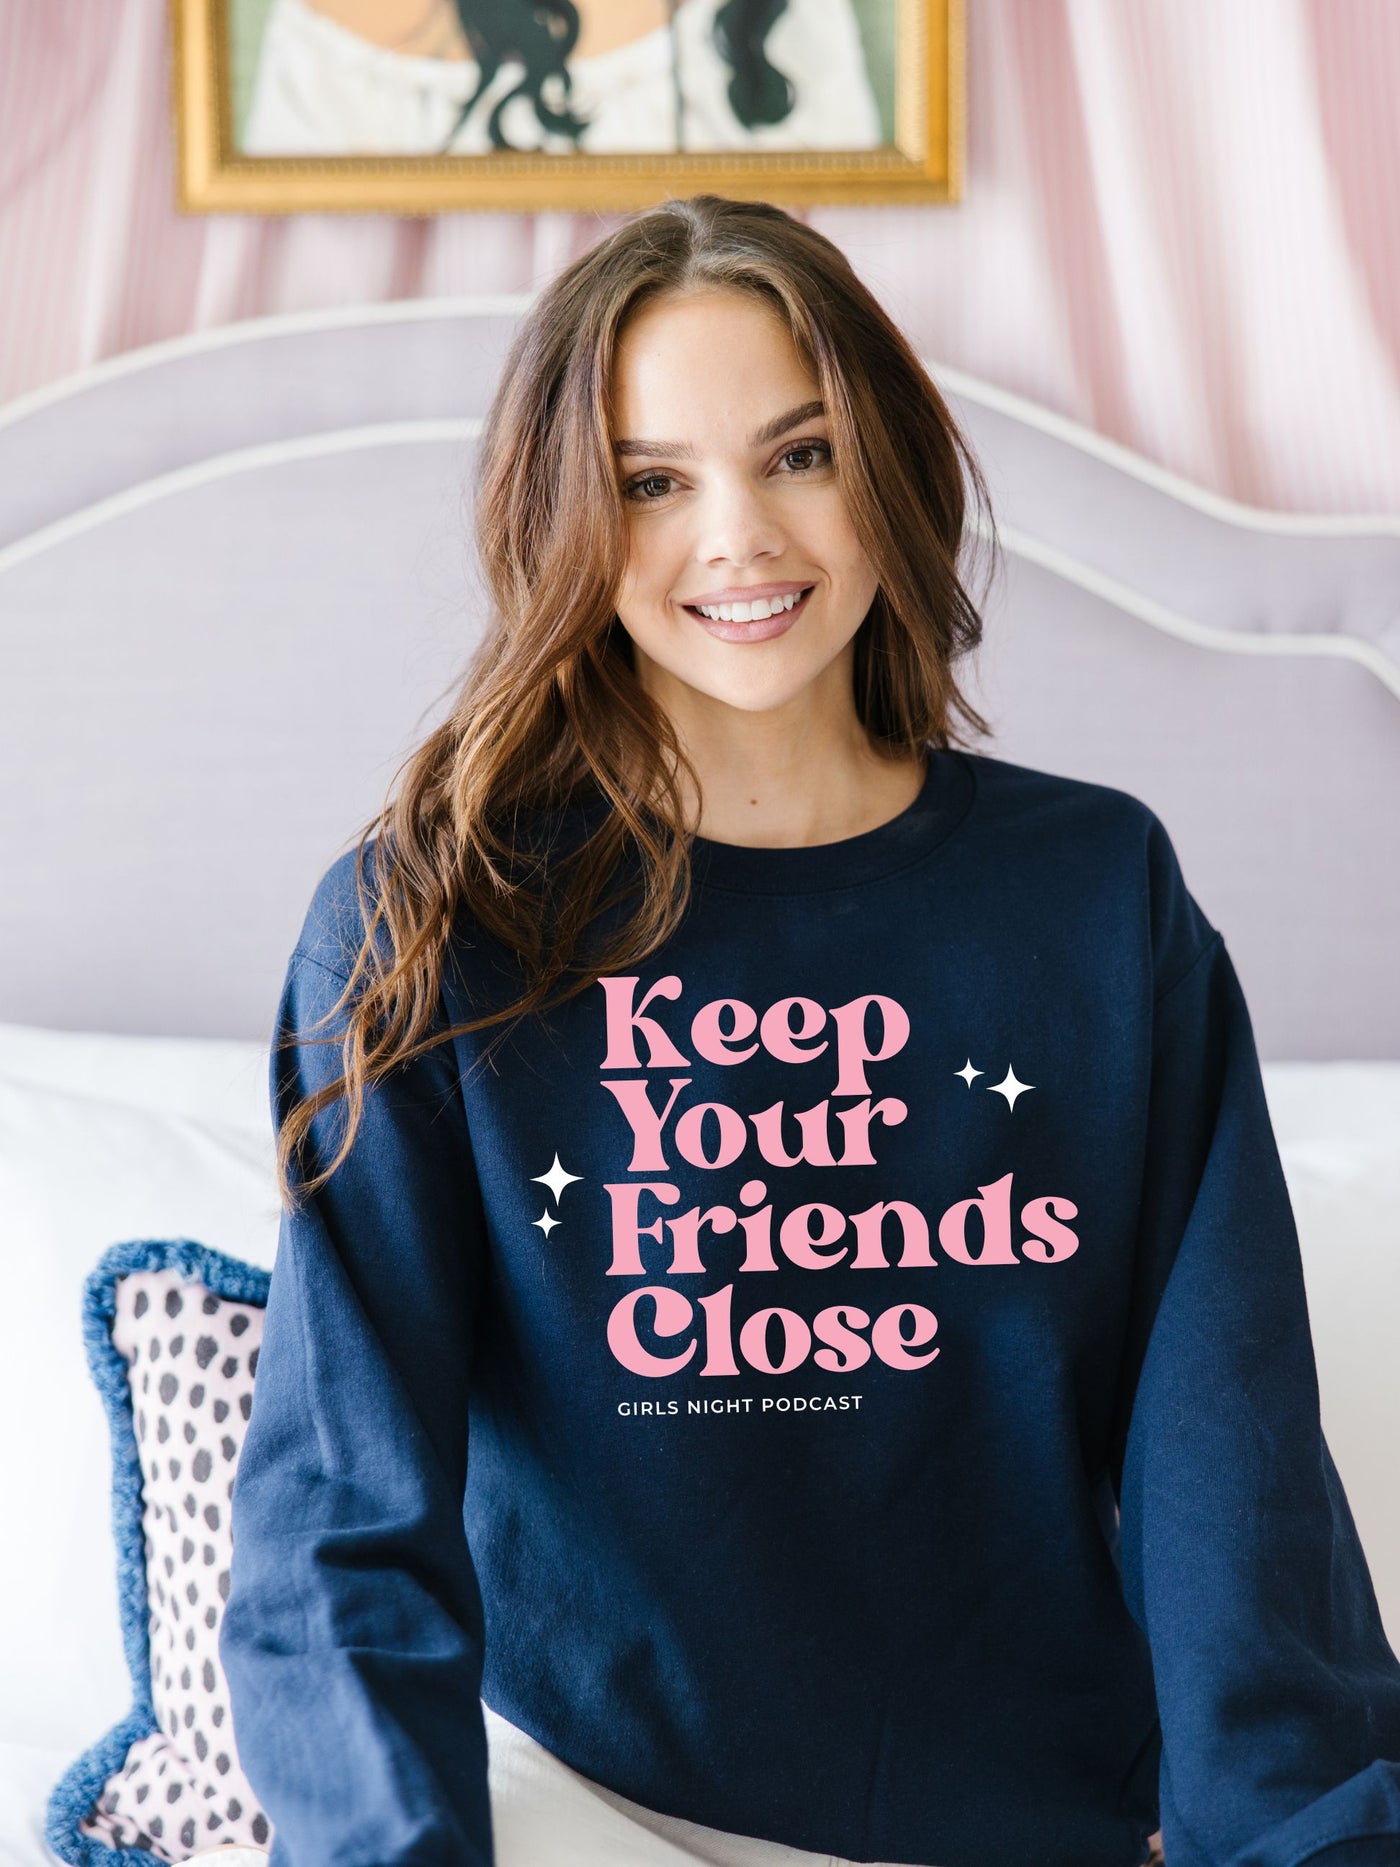 Keep Your Friends Close sweatshirt